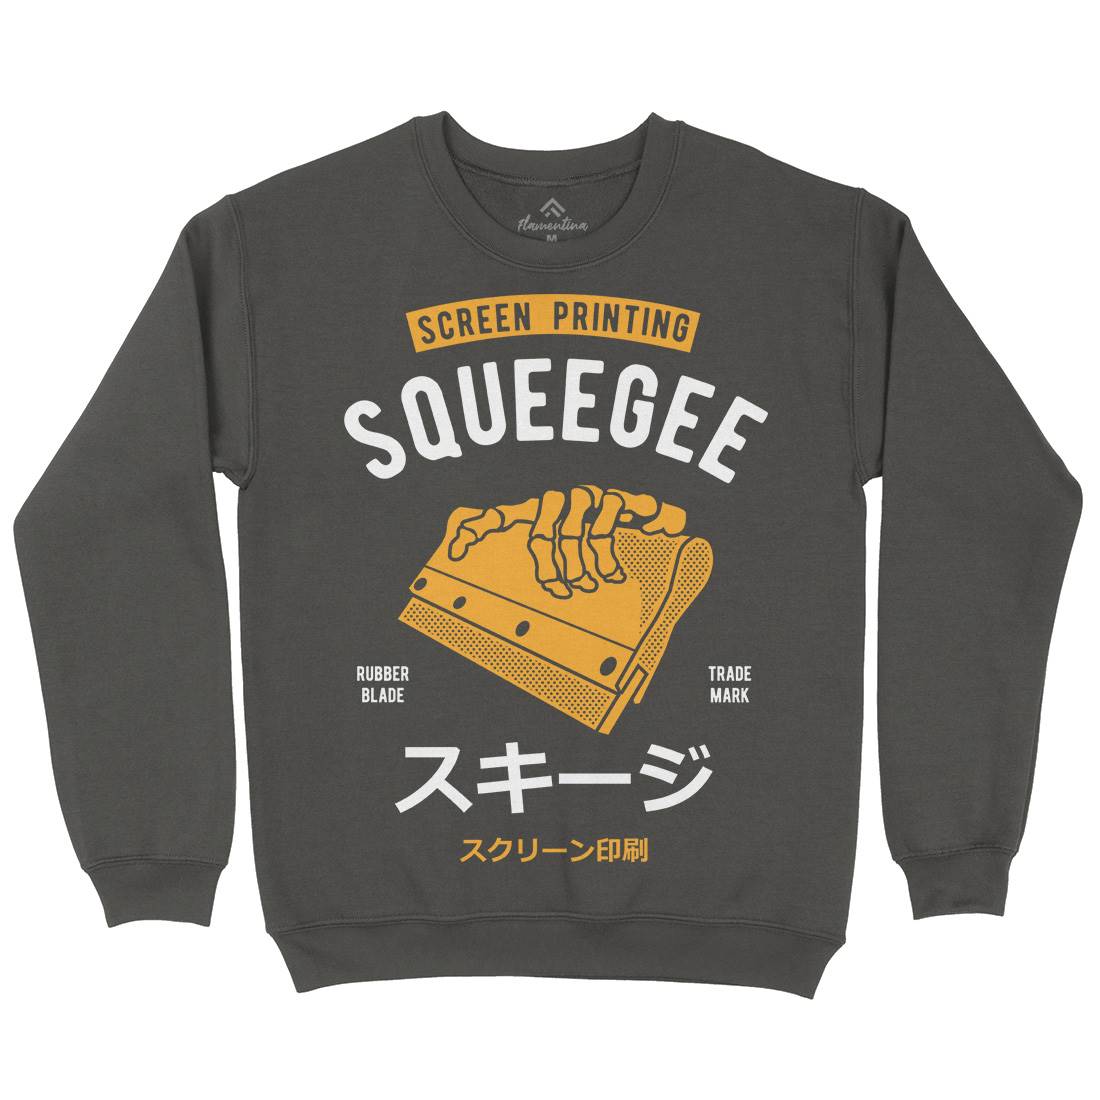 Squeegee Social Club Kids Crew Neck Sweatshirt Work A282